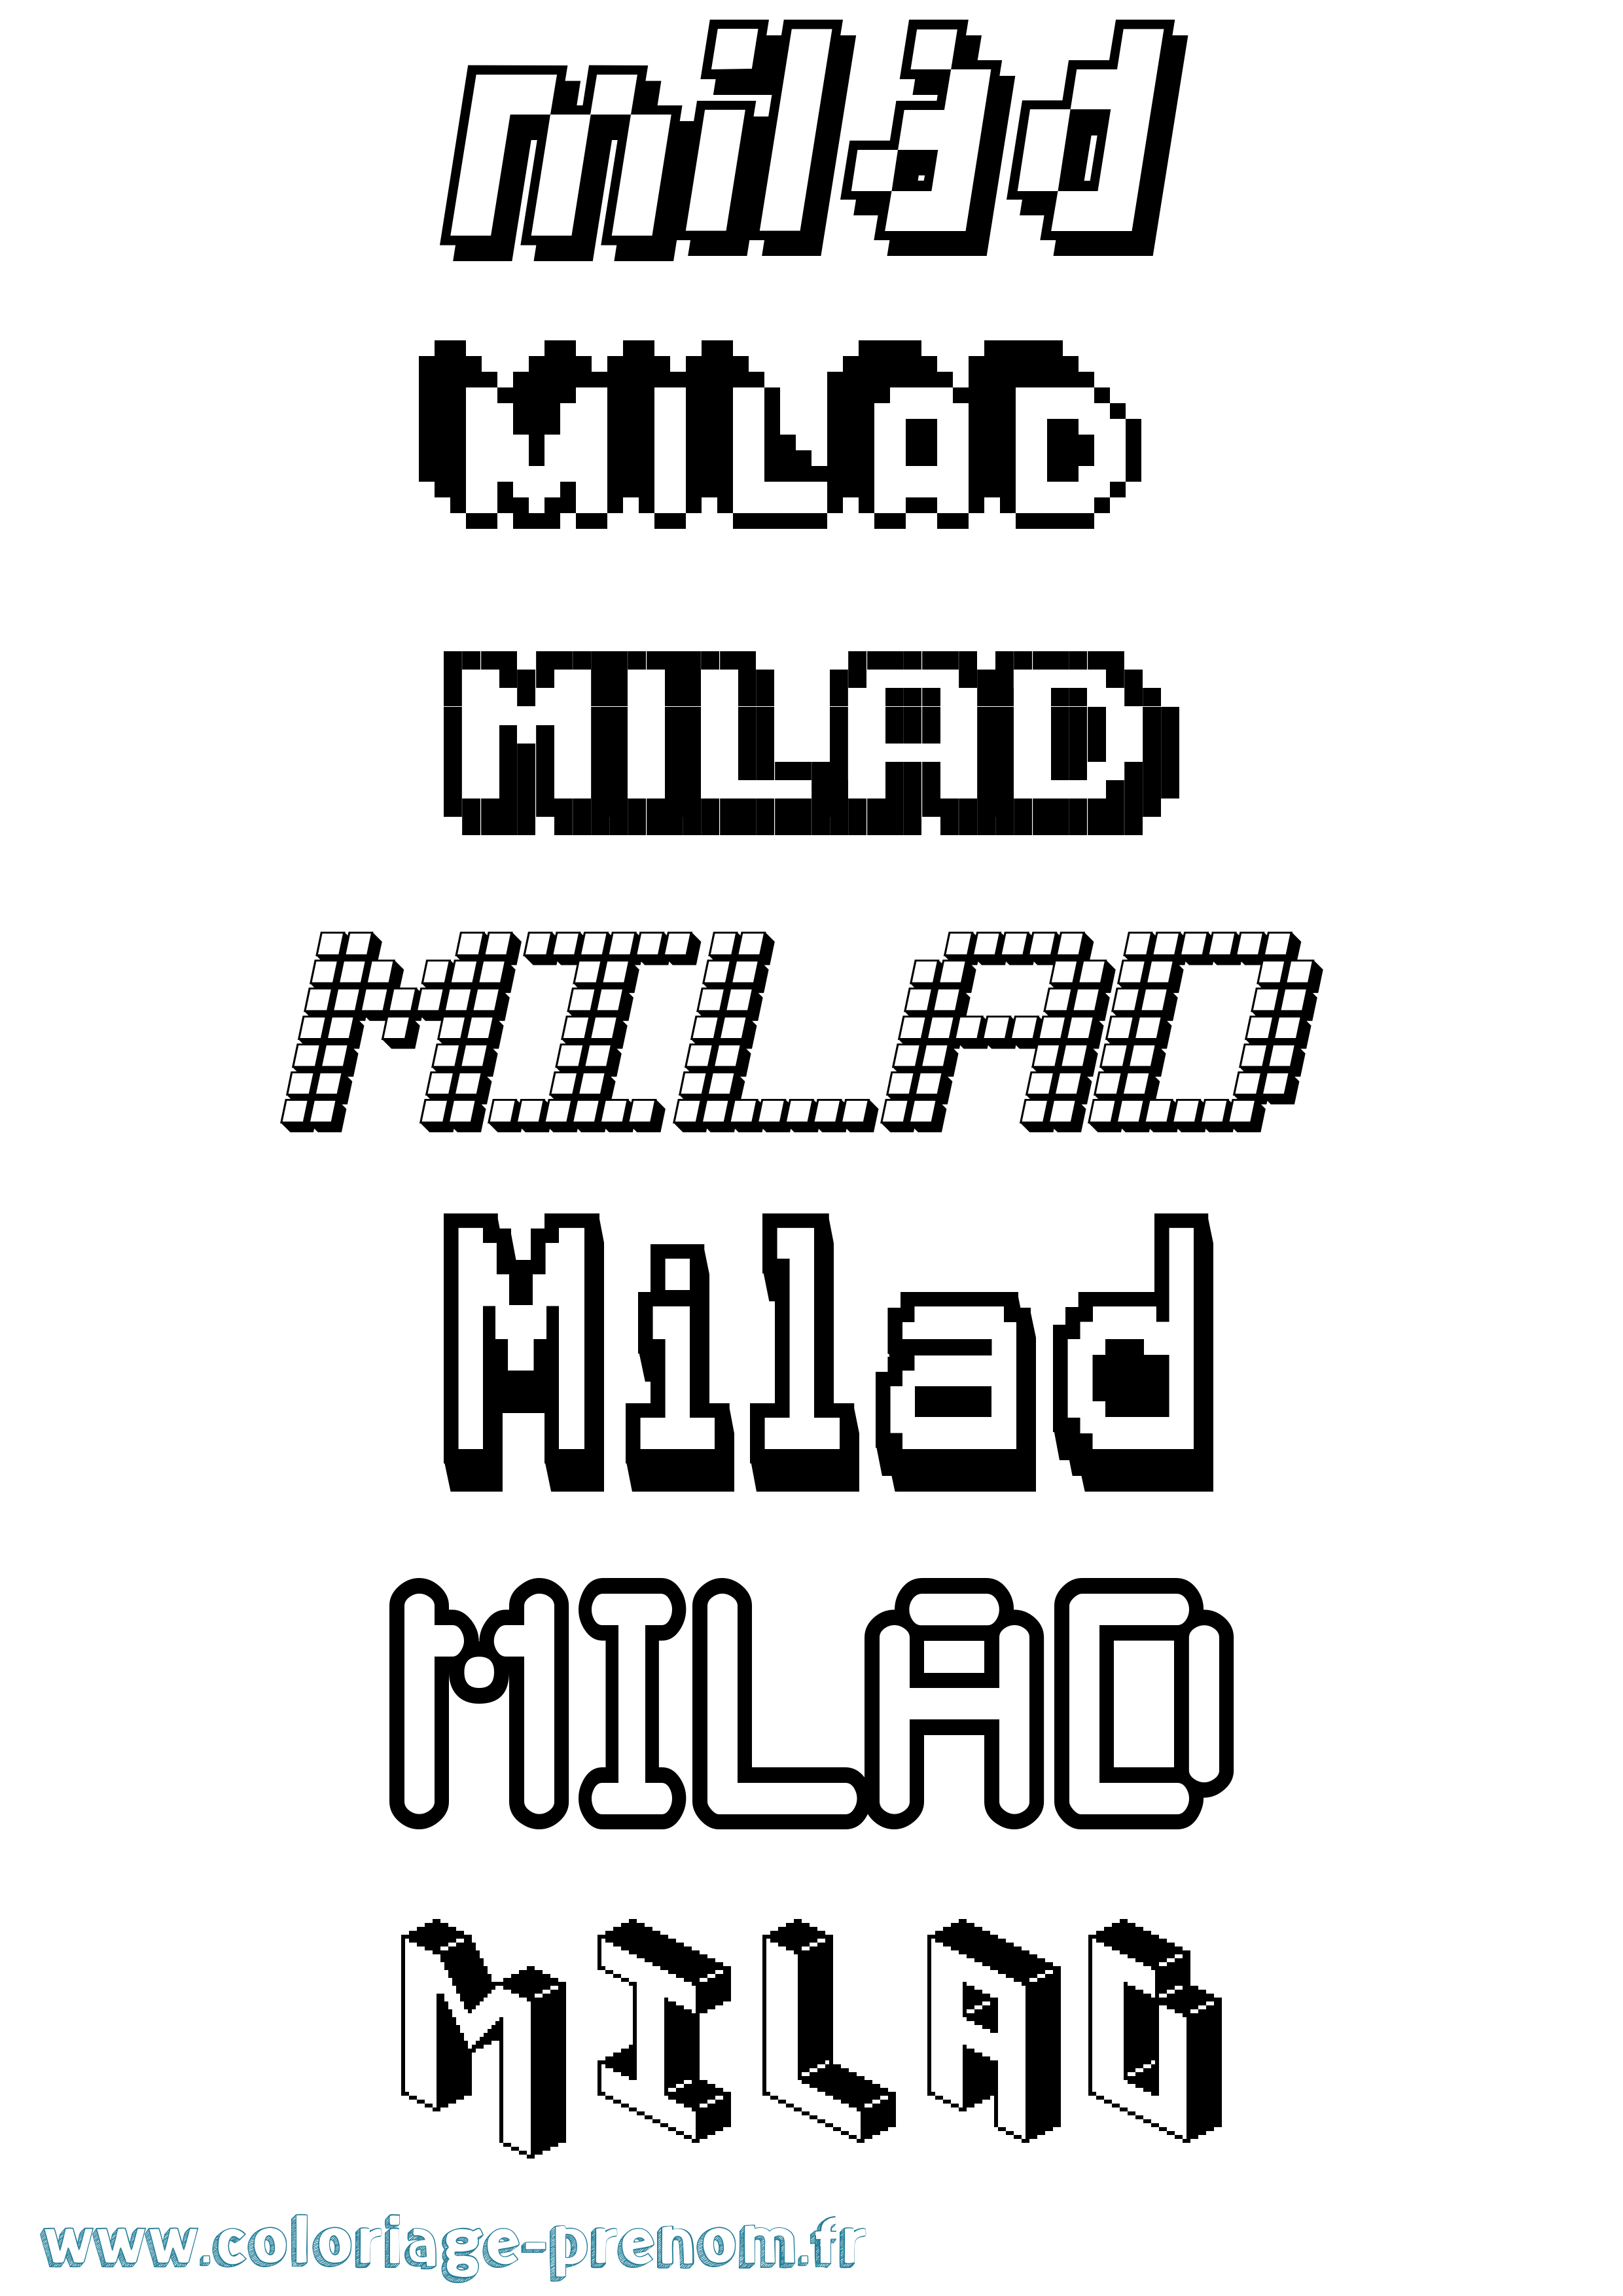 Coloriage prénom Milad Pixel